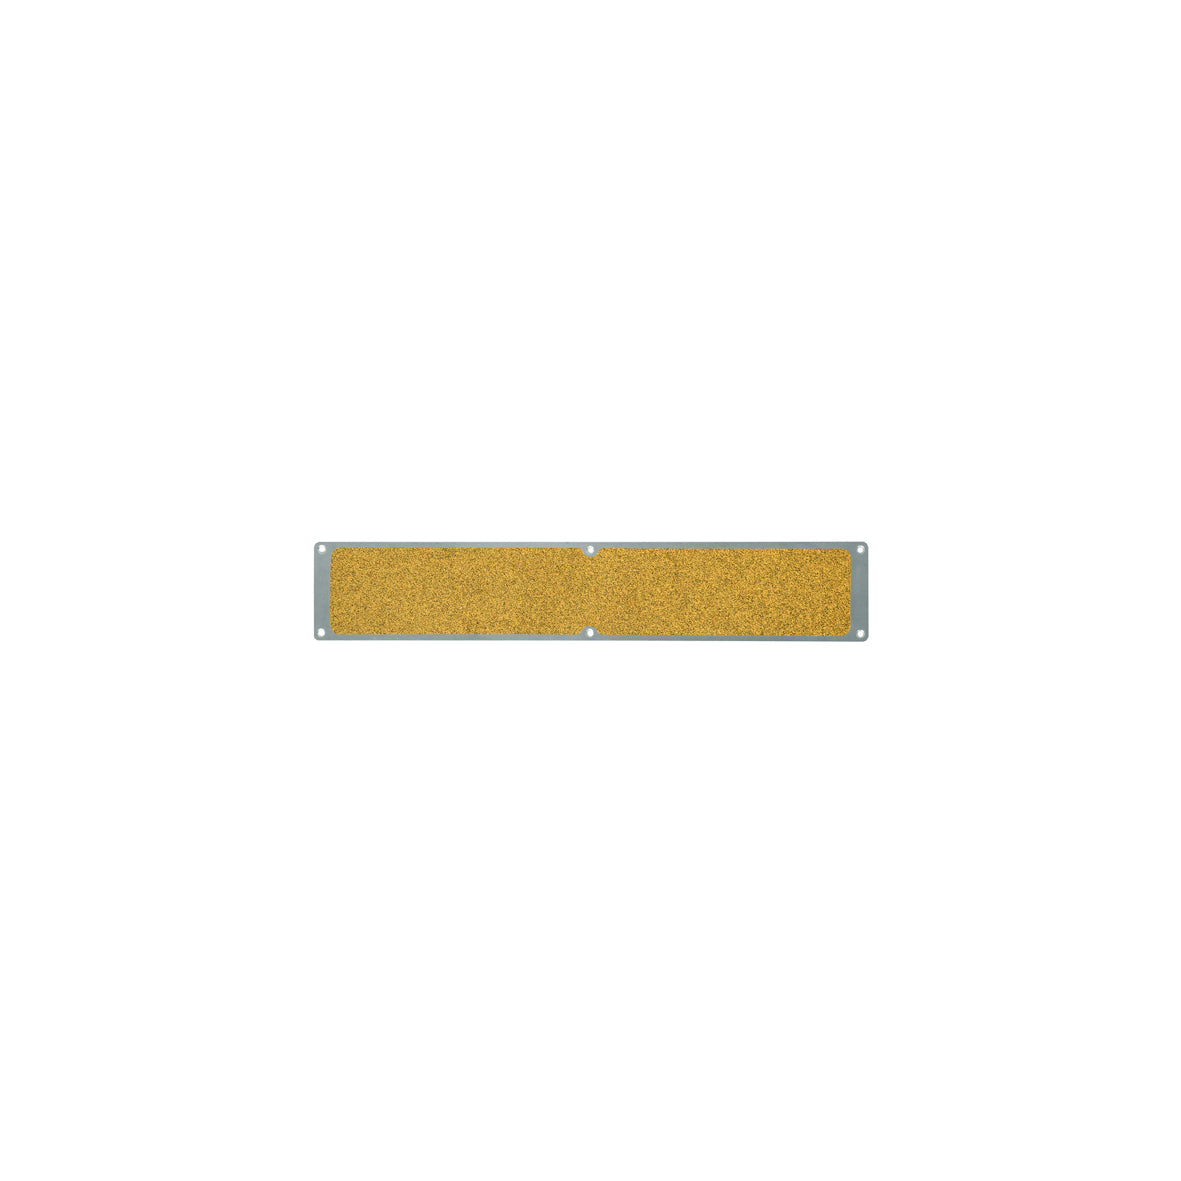 Antirutschplatte Alu Universal, Public 46 gelb 114x635mm